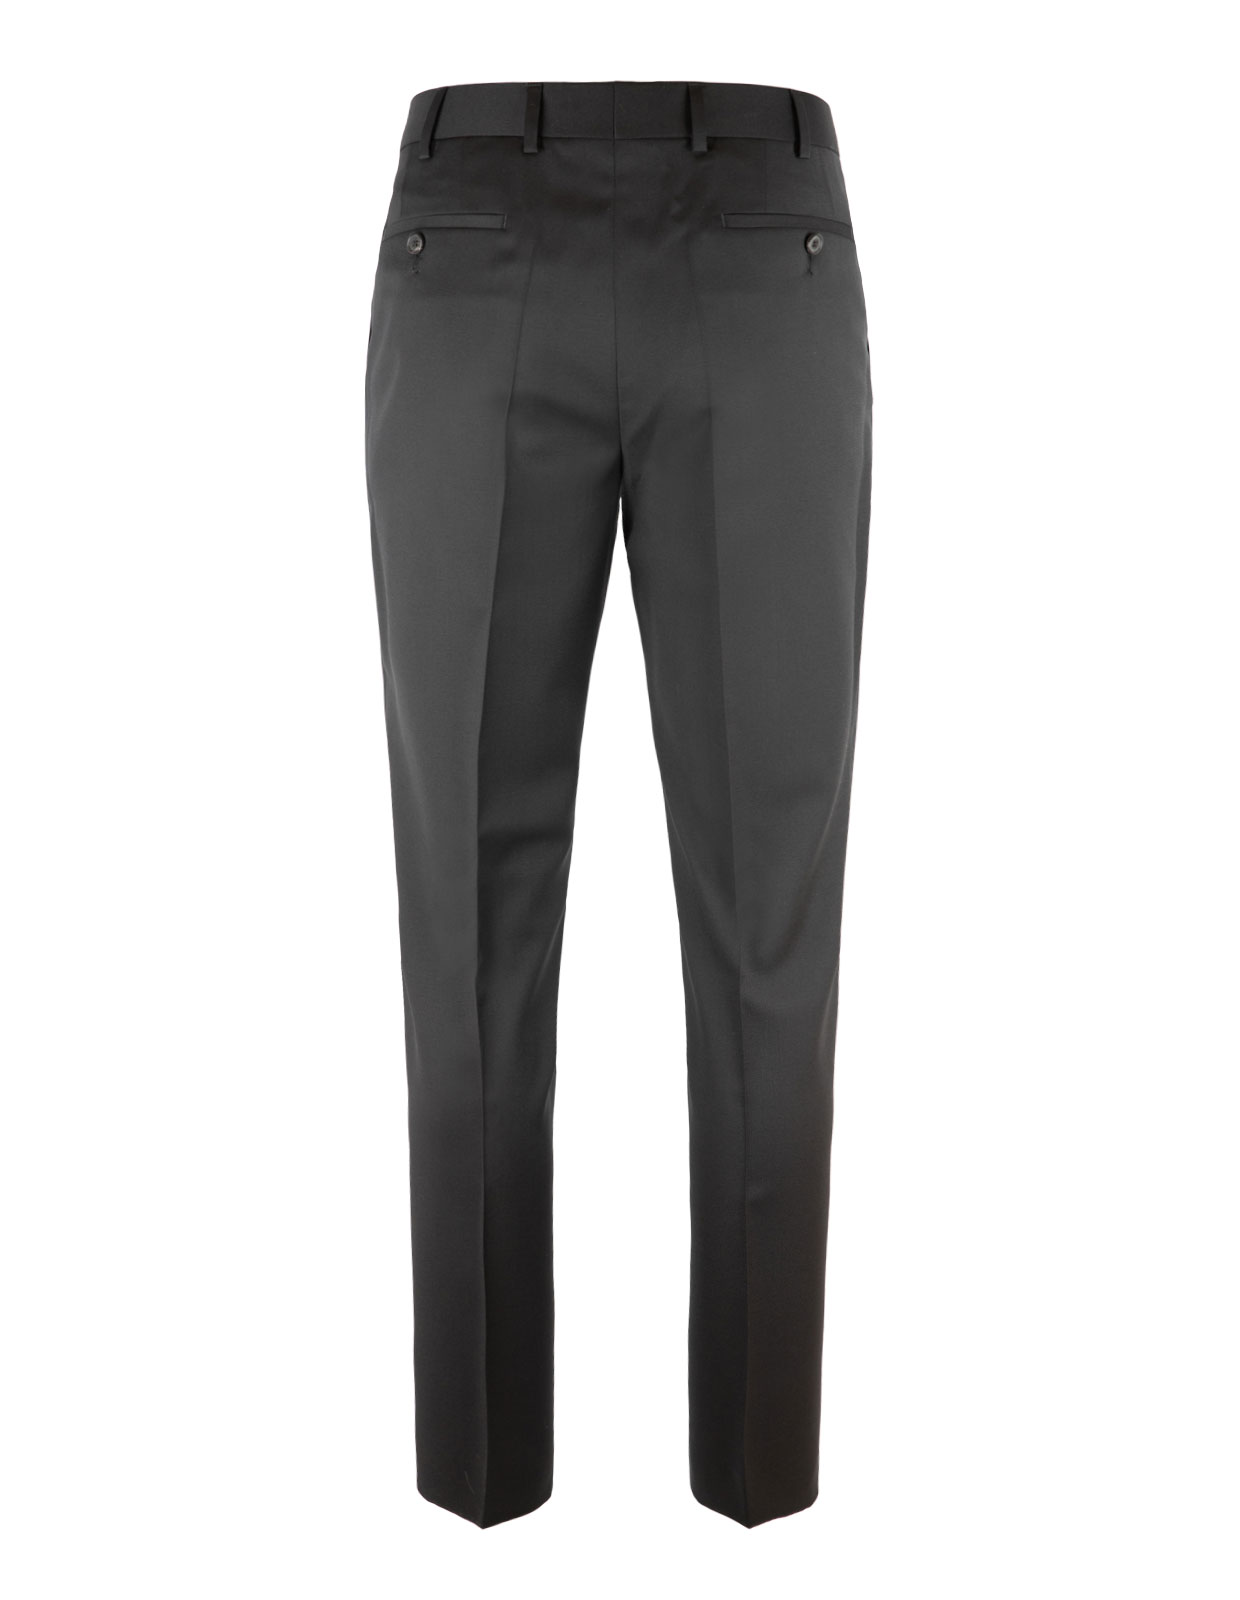 Jeff Suit Trousers 110's Wool Mix & Match Black Stl 150